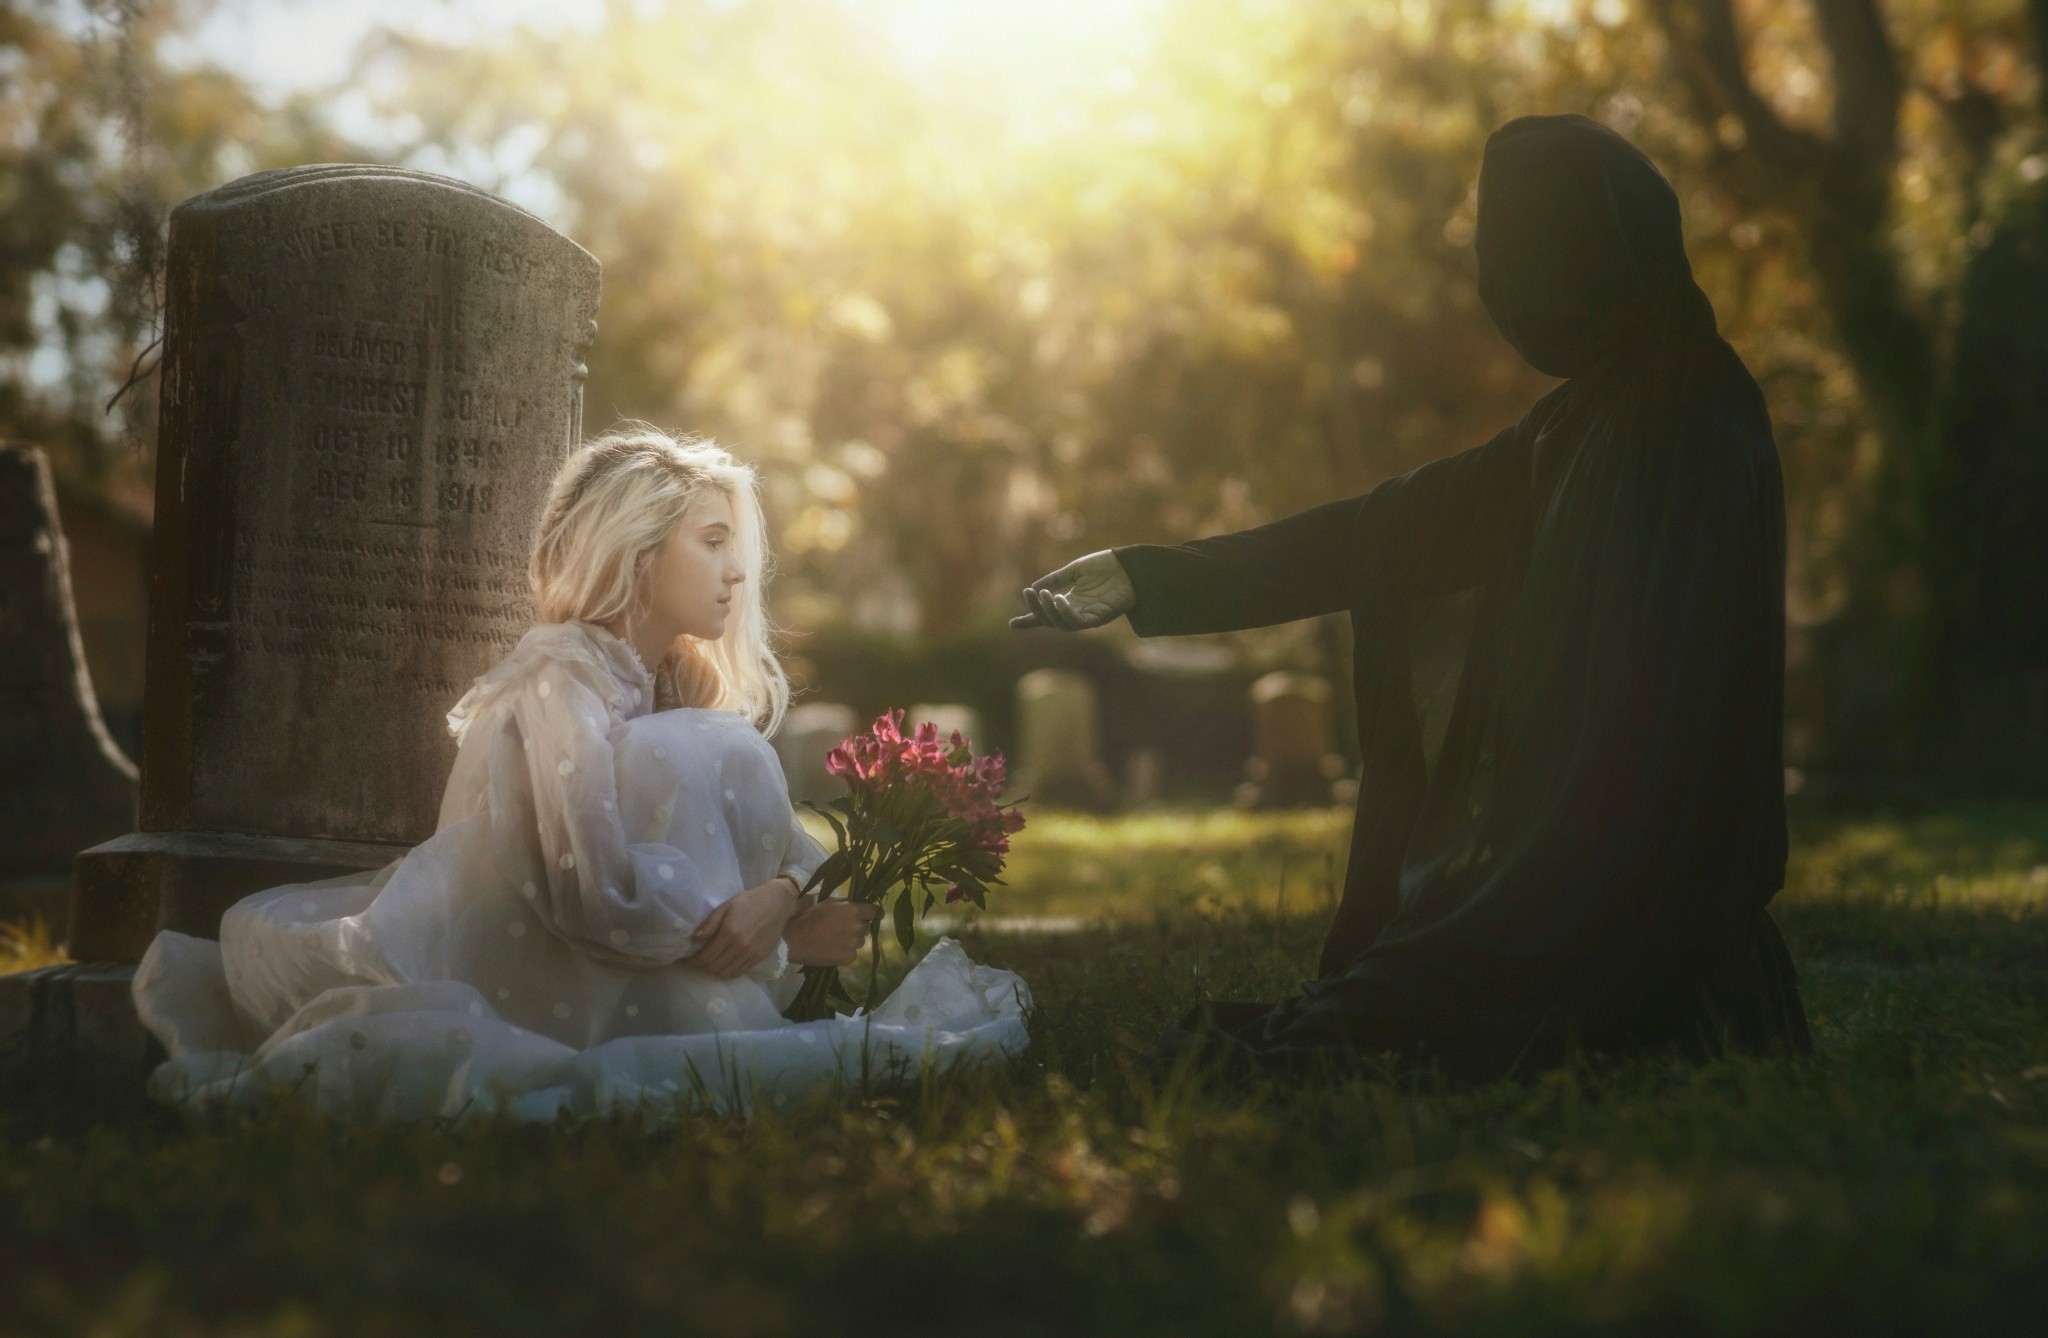 People 2048x1338 death Grim Reaper tombstones graveyards women model flowers white dress women outdoors blonde